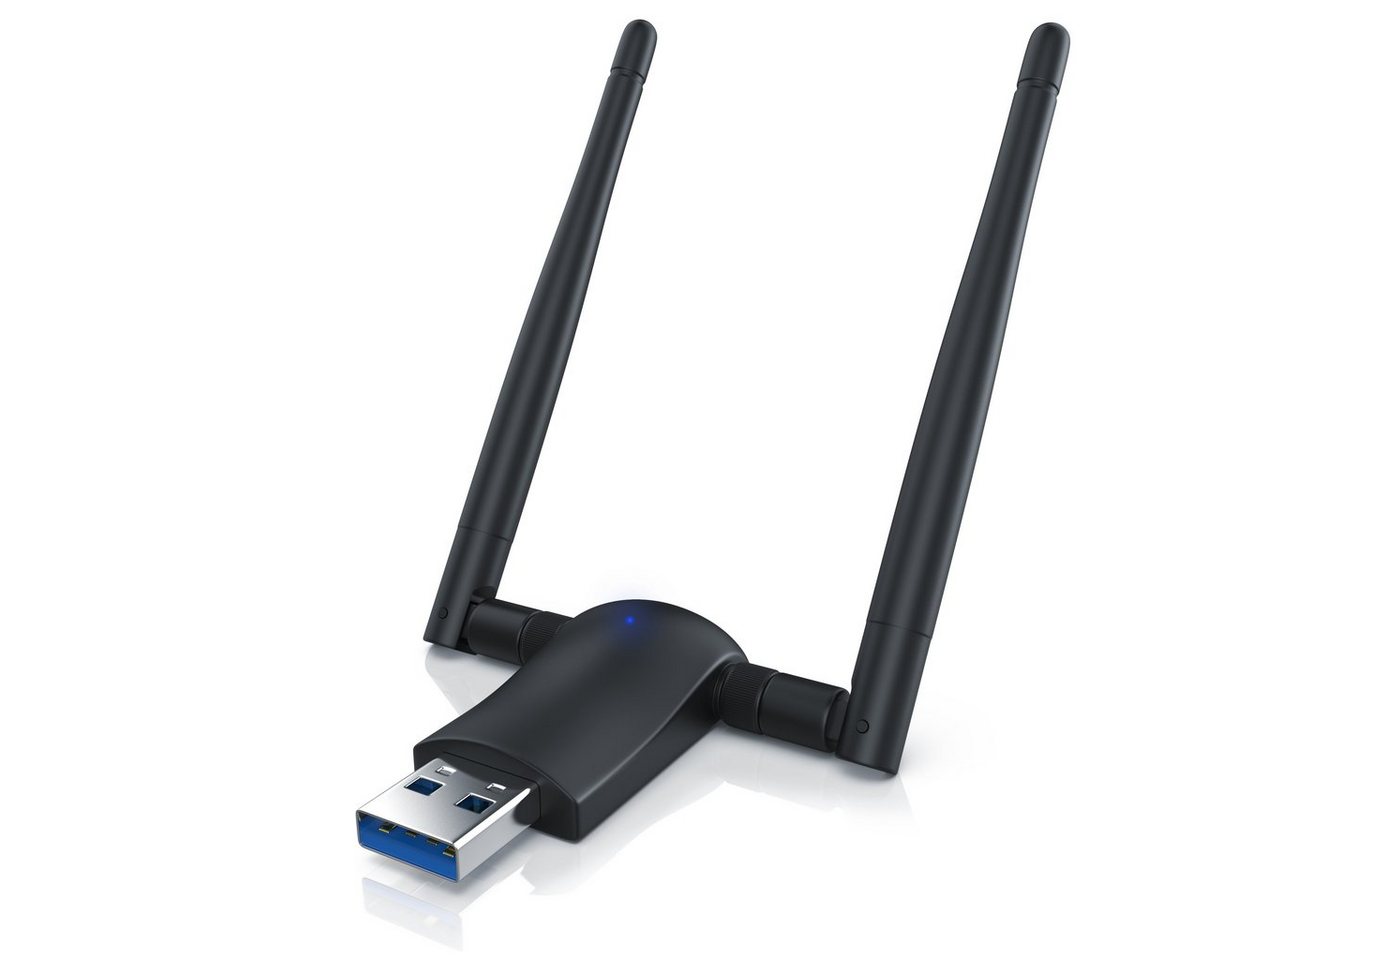 Aplic WLAN-Stick, WIFI Dongle USB3.0, 1200 MBit/s Dual Band 2,4 + 5 Ghz externe Antennen von Aplic